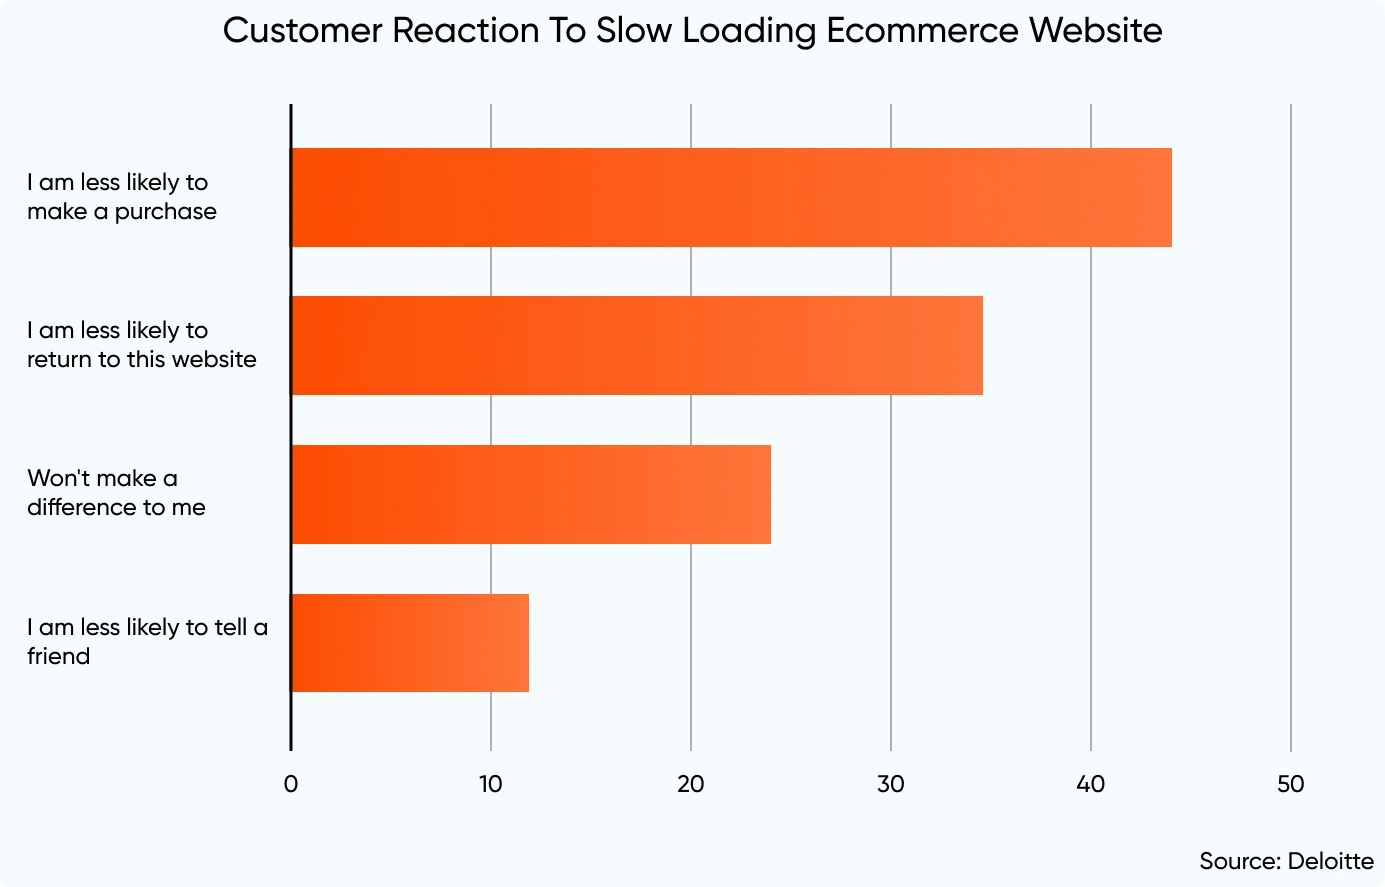 Customer reaction to slow loading e-commerce website